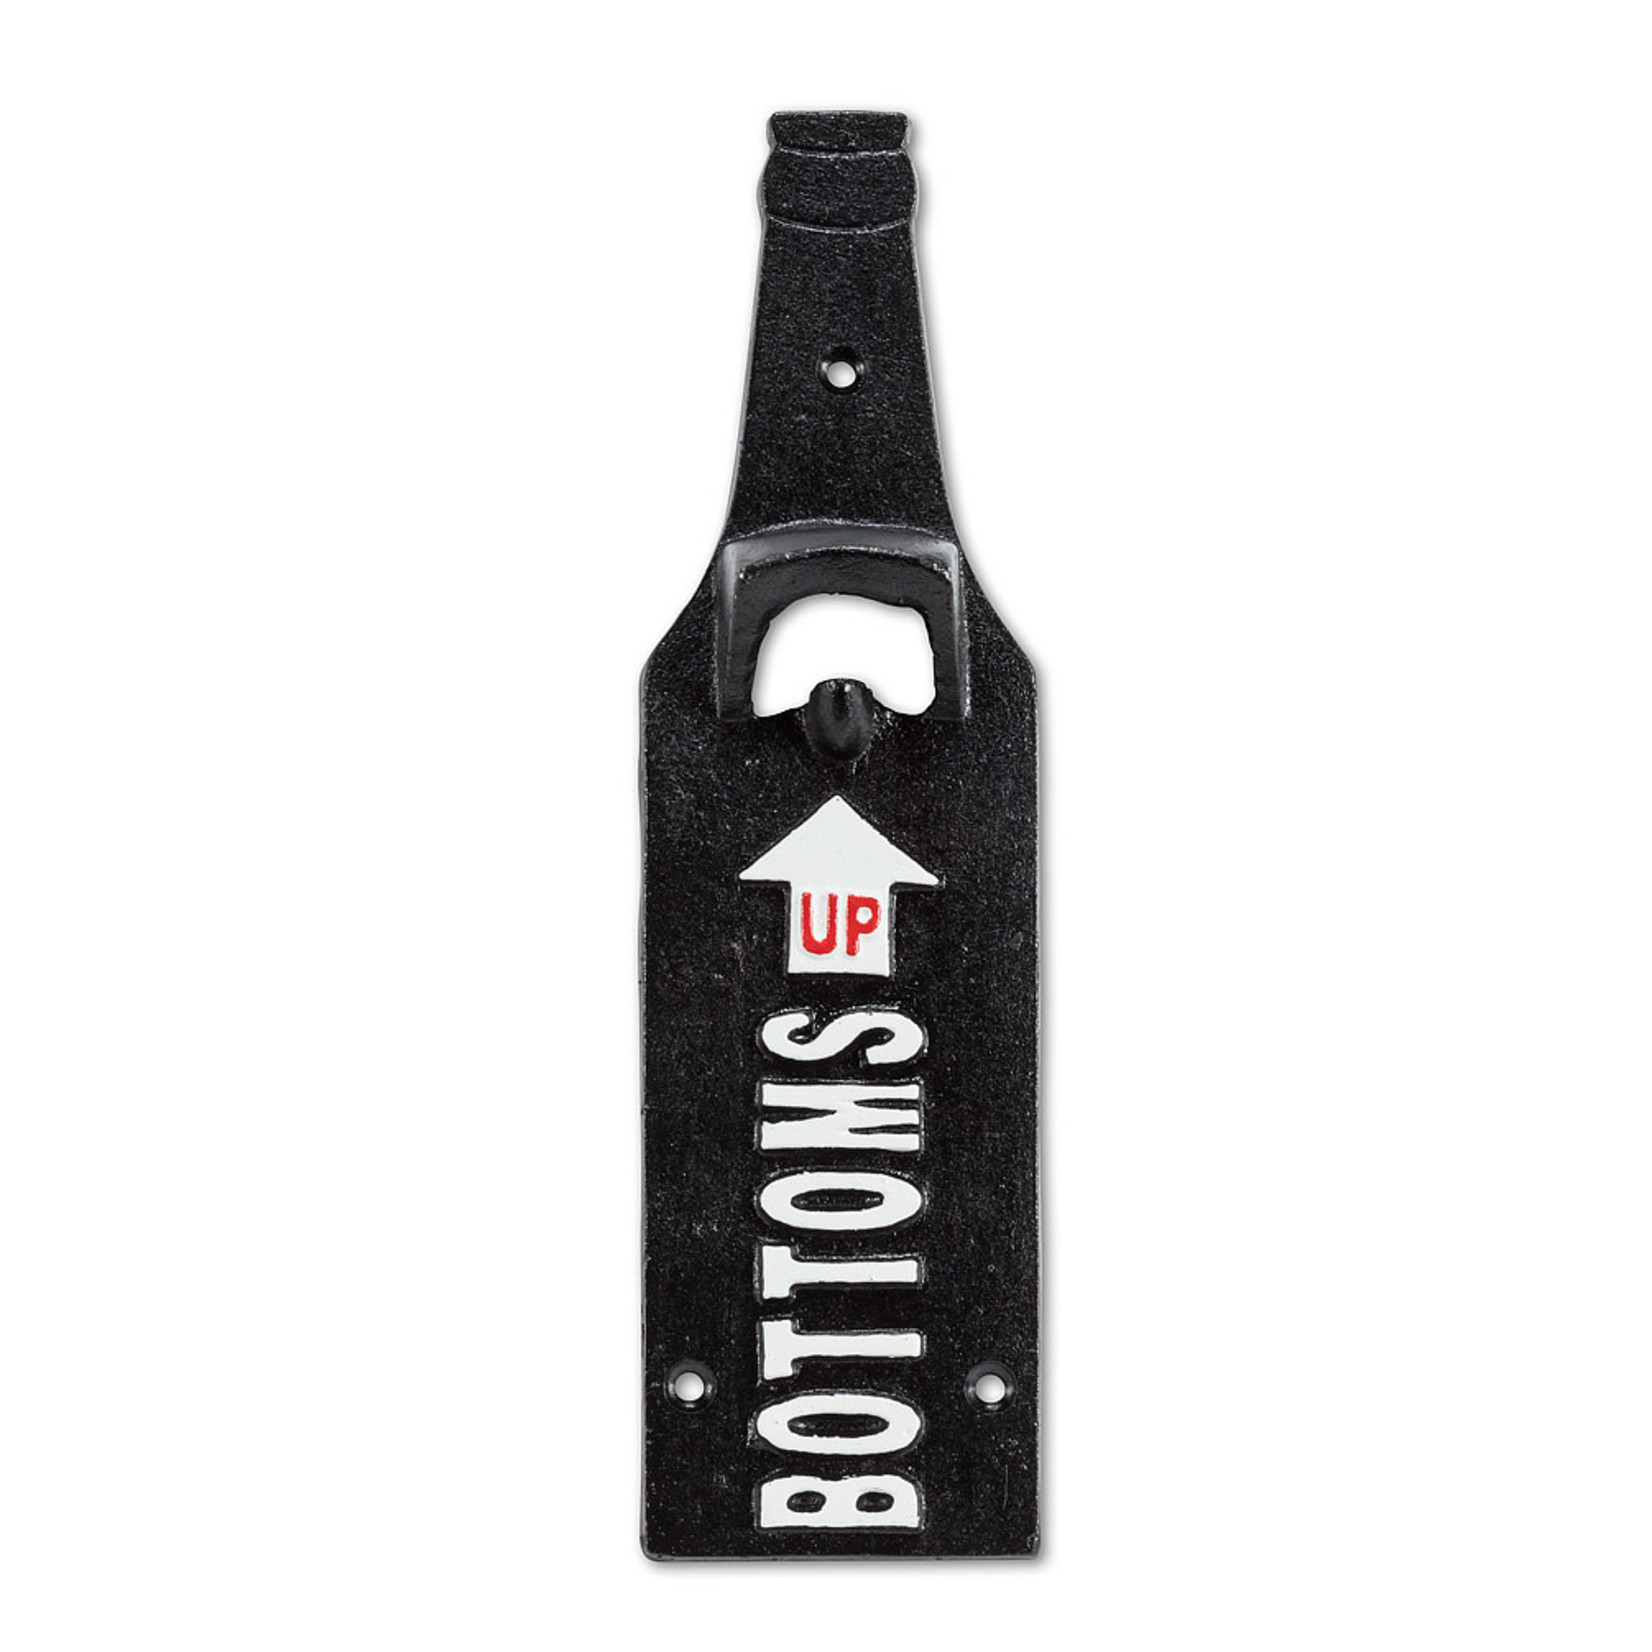 Bottoms Up - Wall Bottle Opener